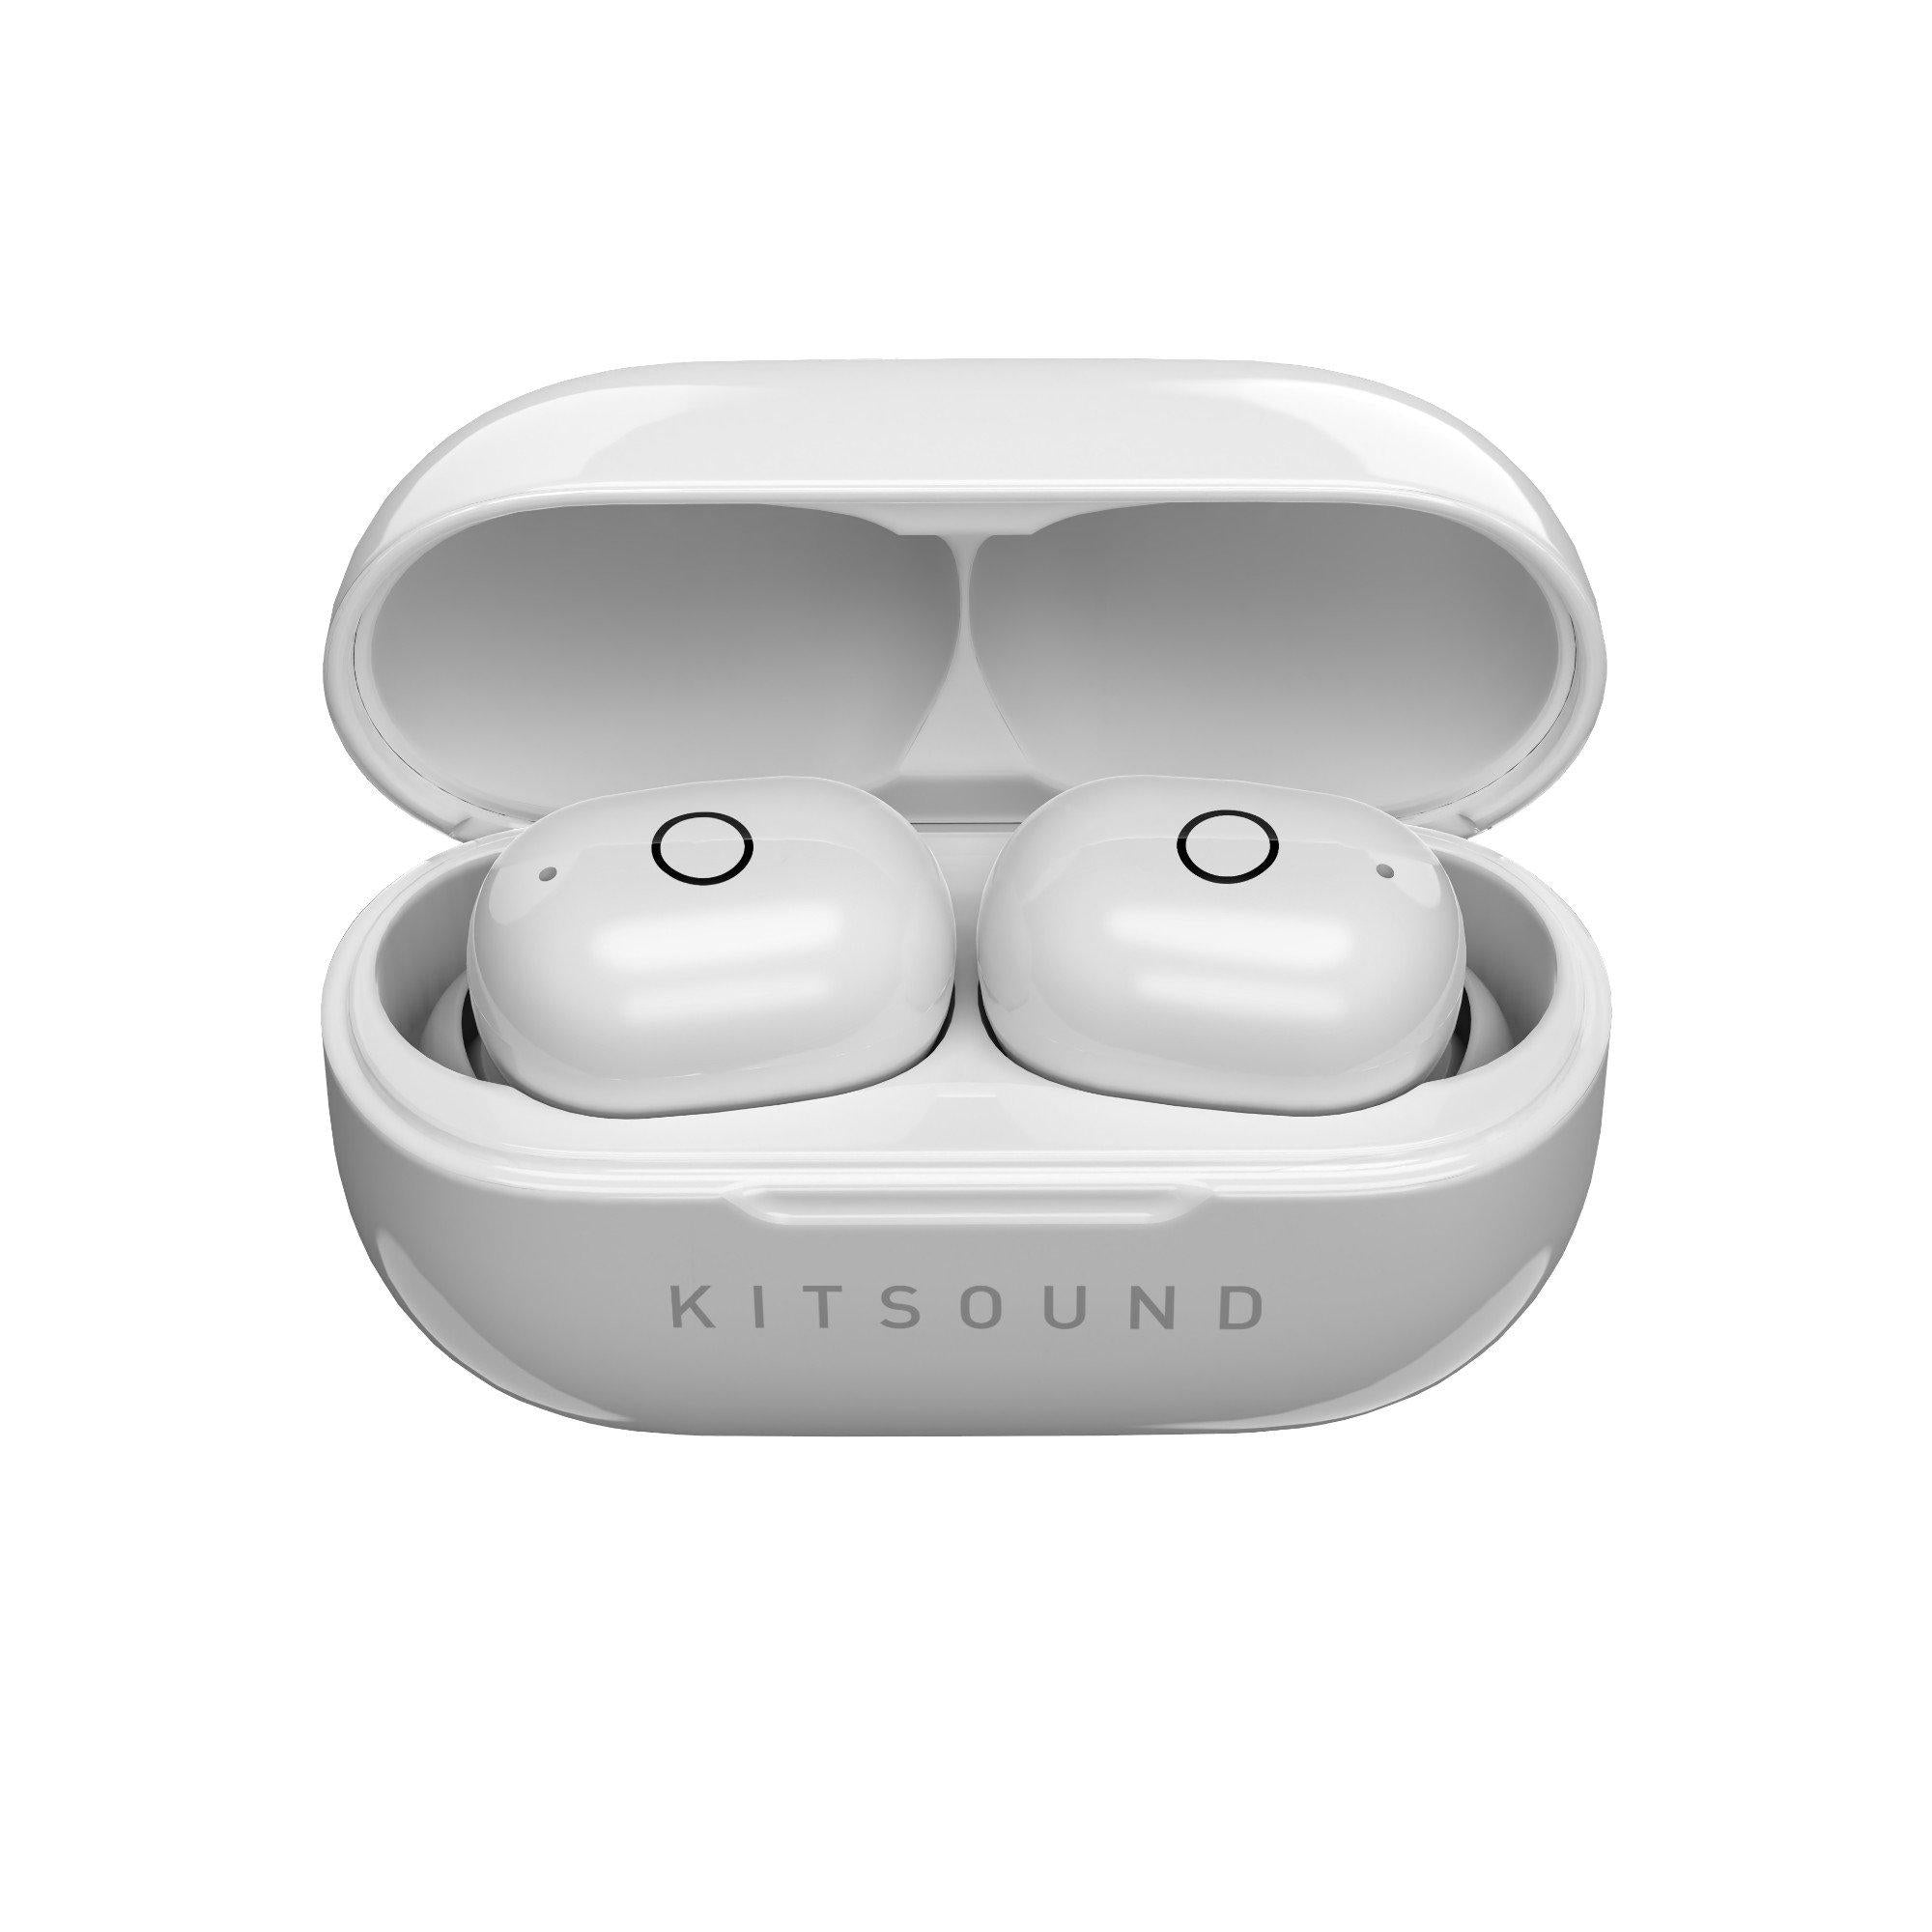 KitSound Edge 20 True Wireless Bluetooth Earbuds - White - Refurbished Good